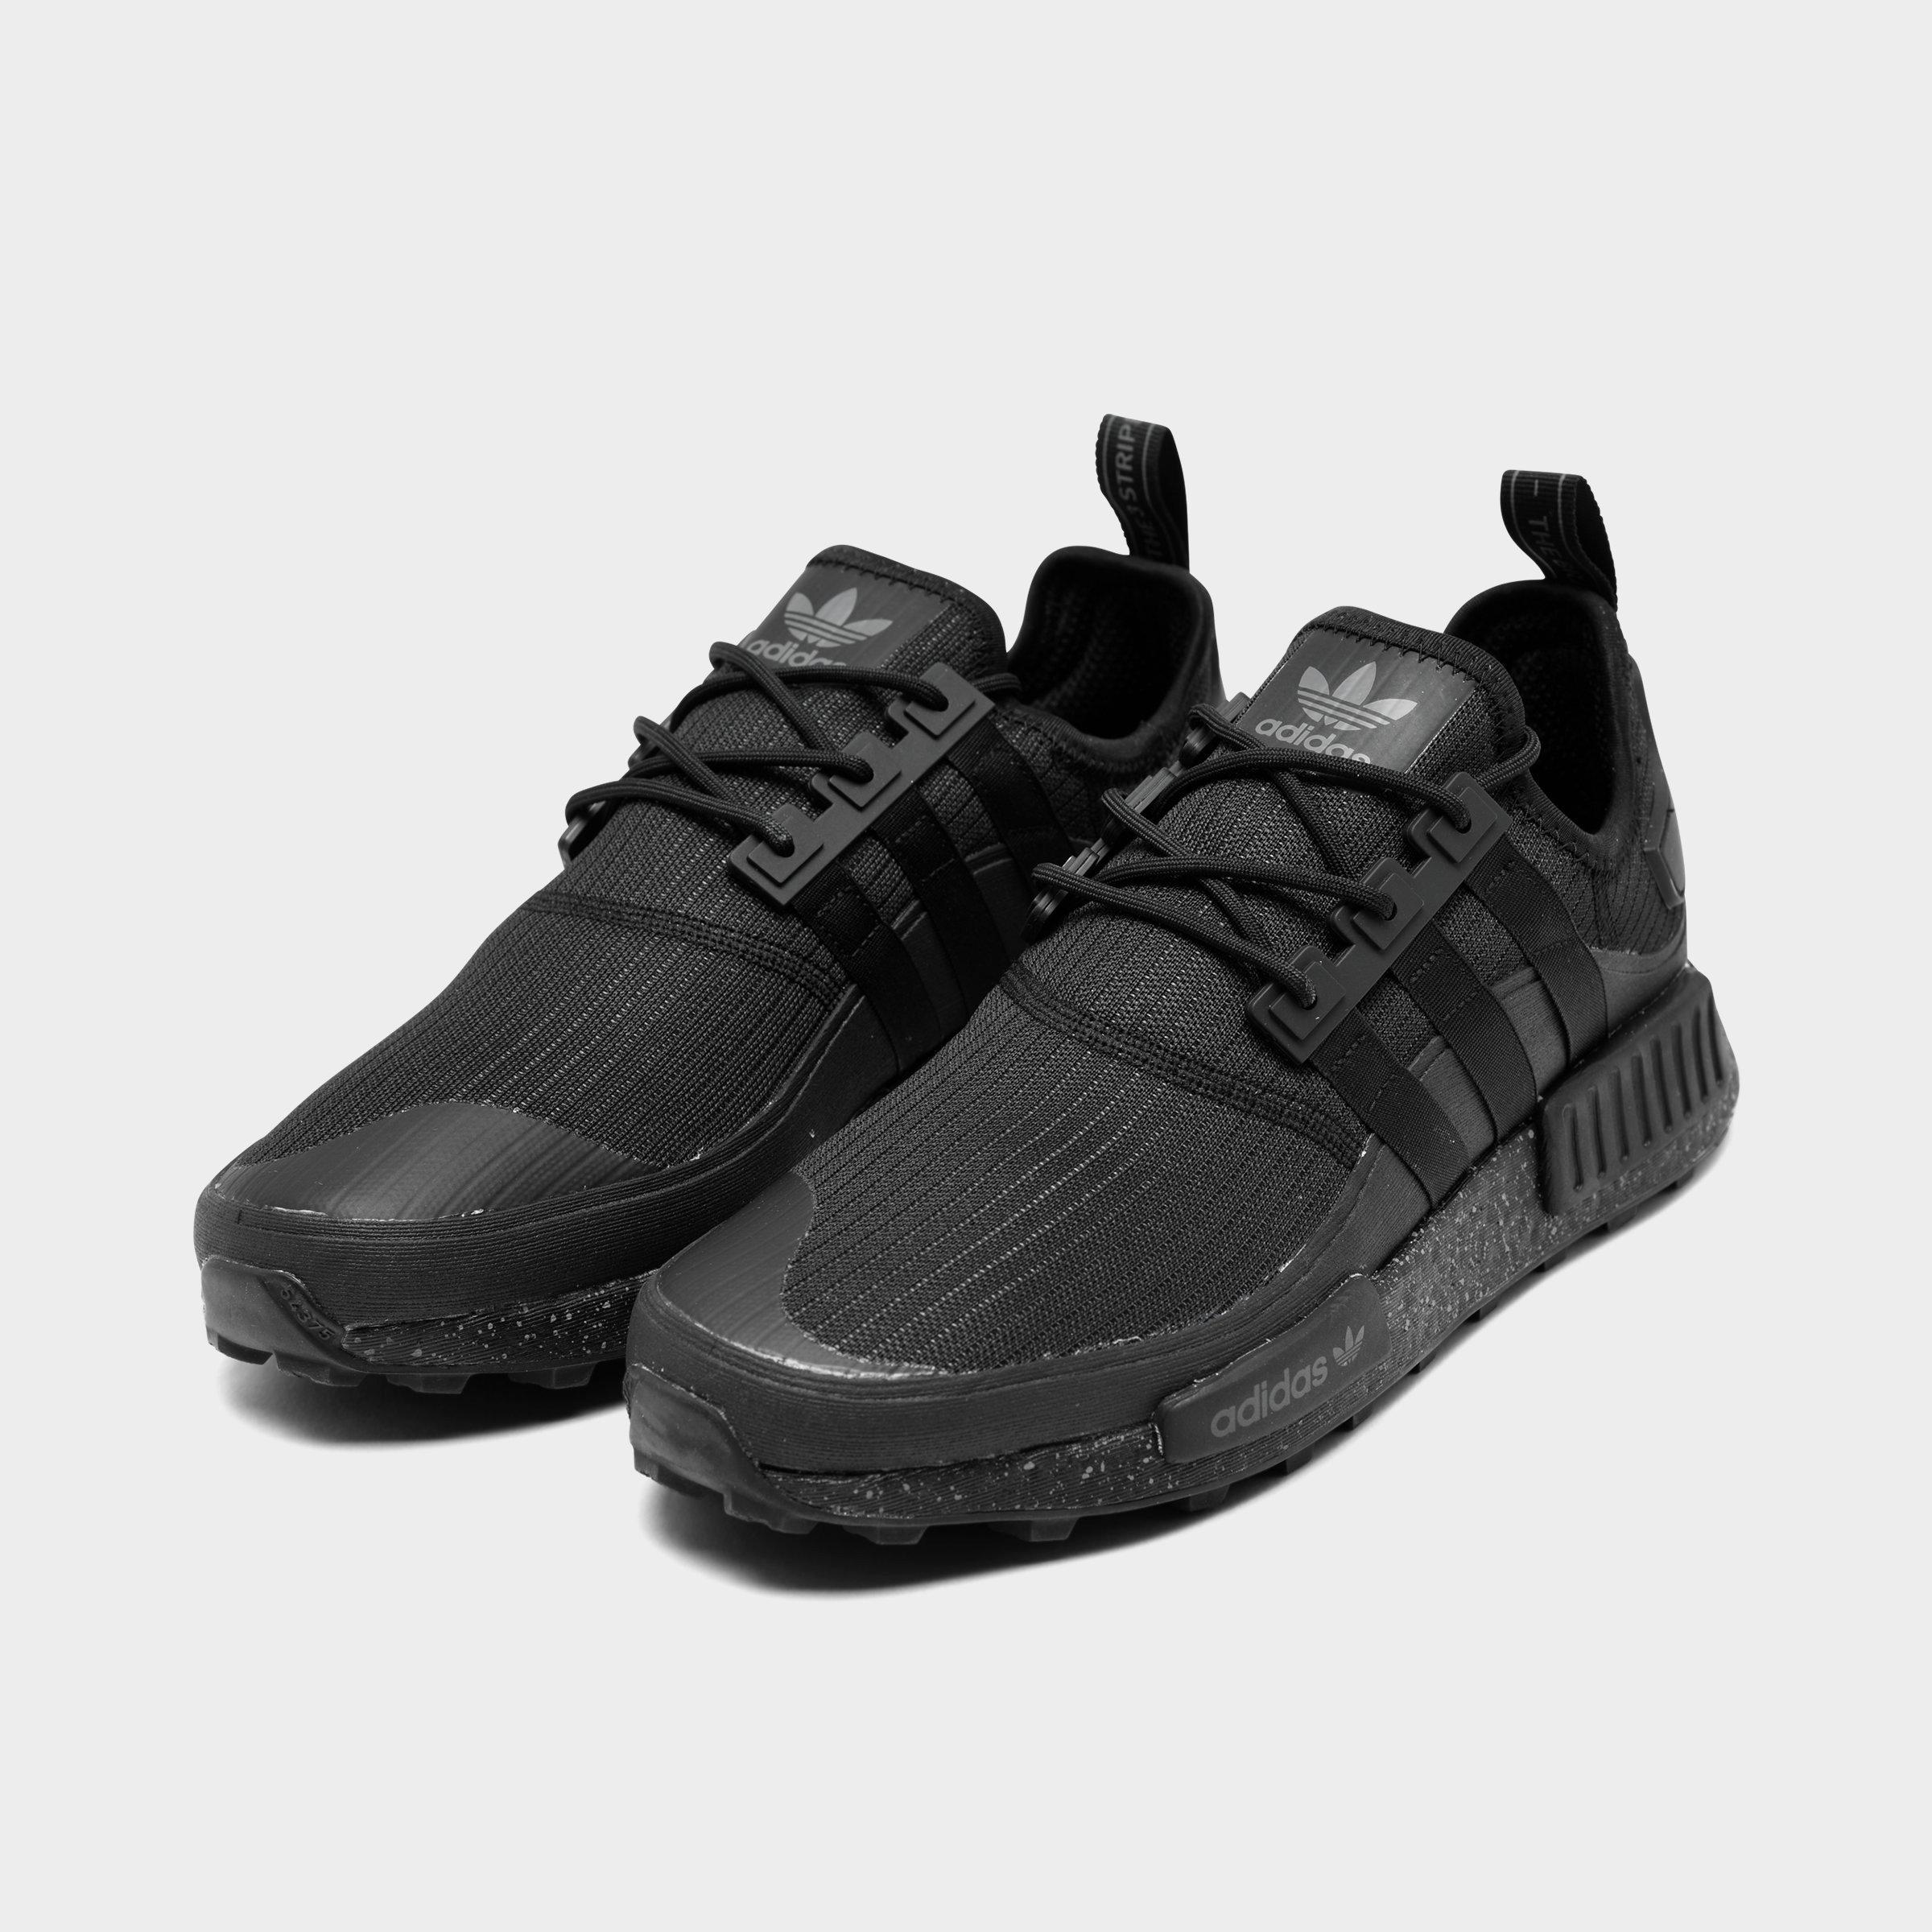 adidas nmd running shoes